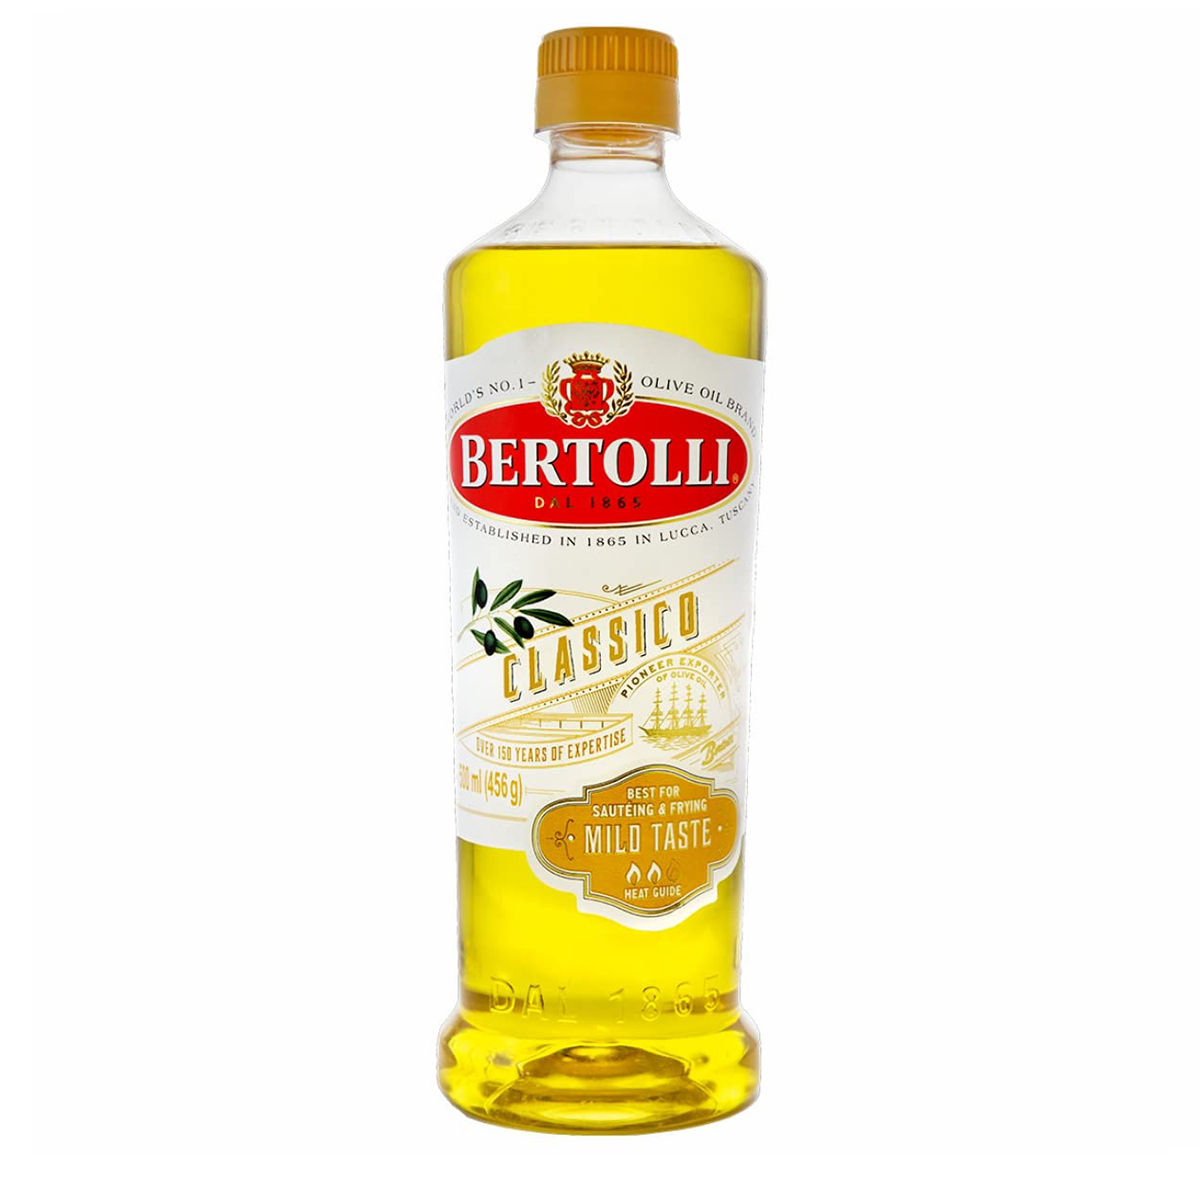 Buy Bertolli Classico Olive Oil, 500ml Online